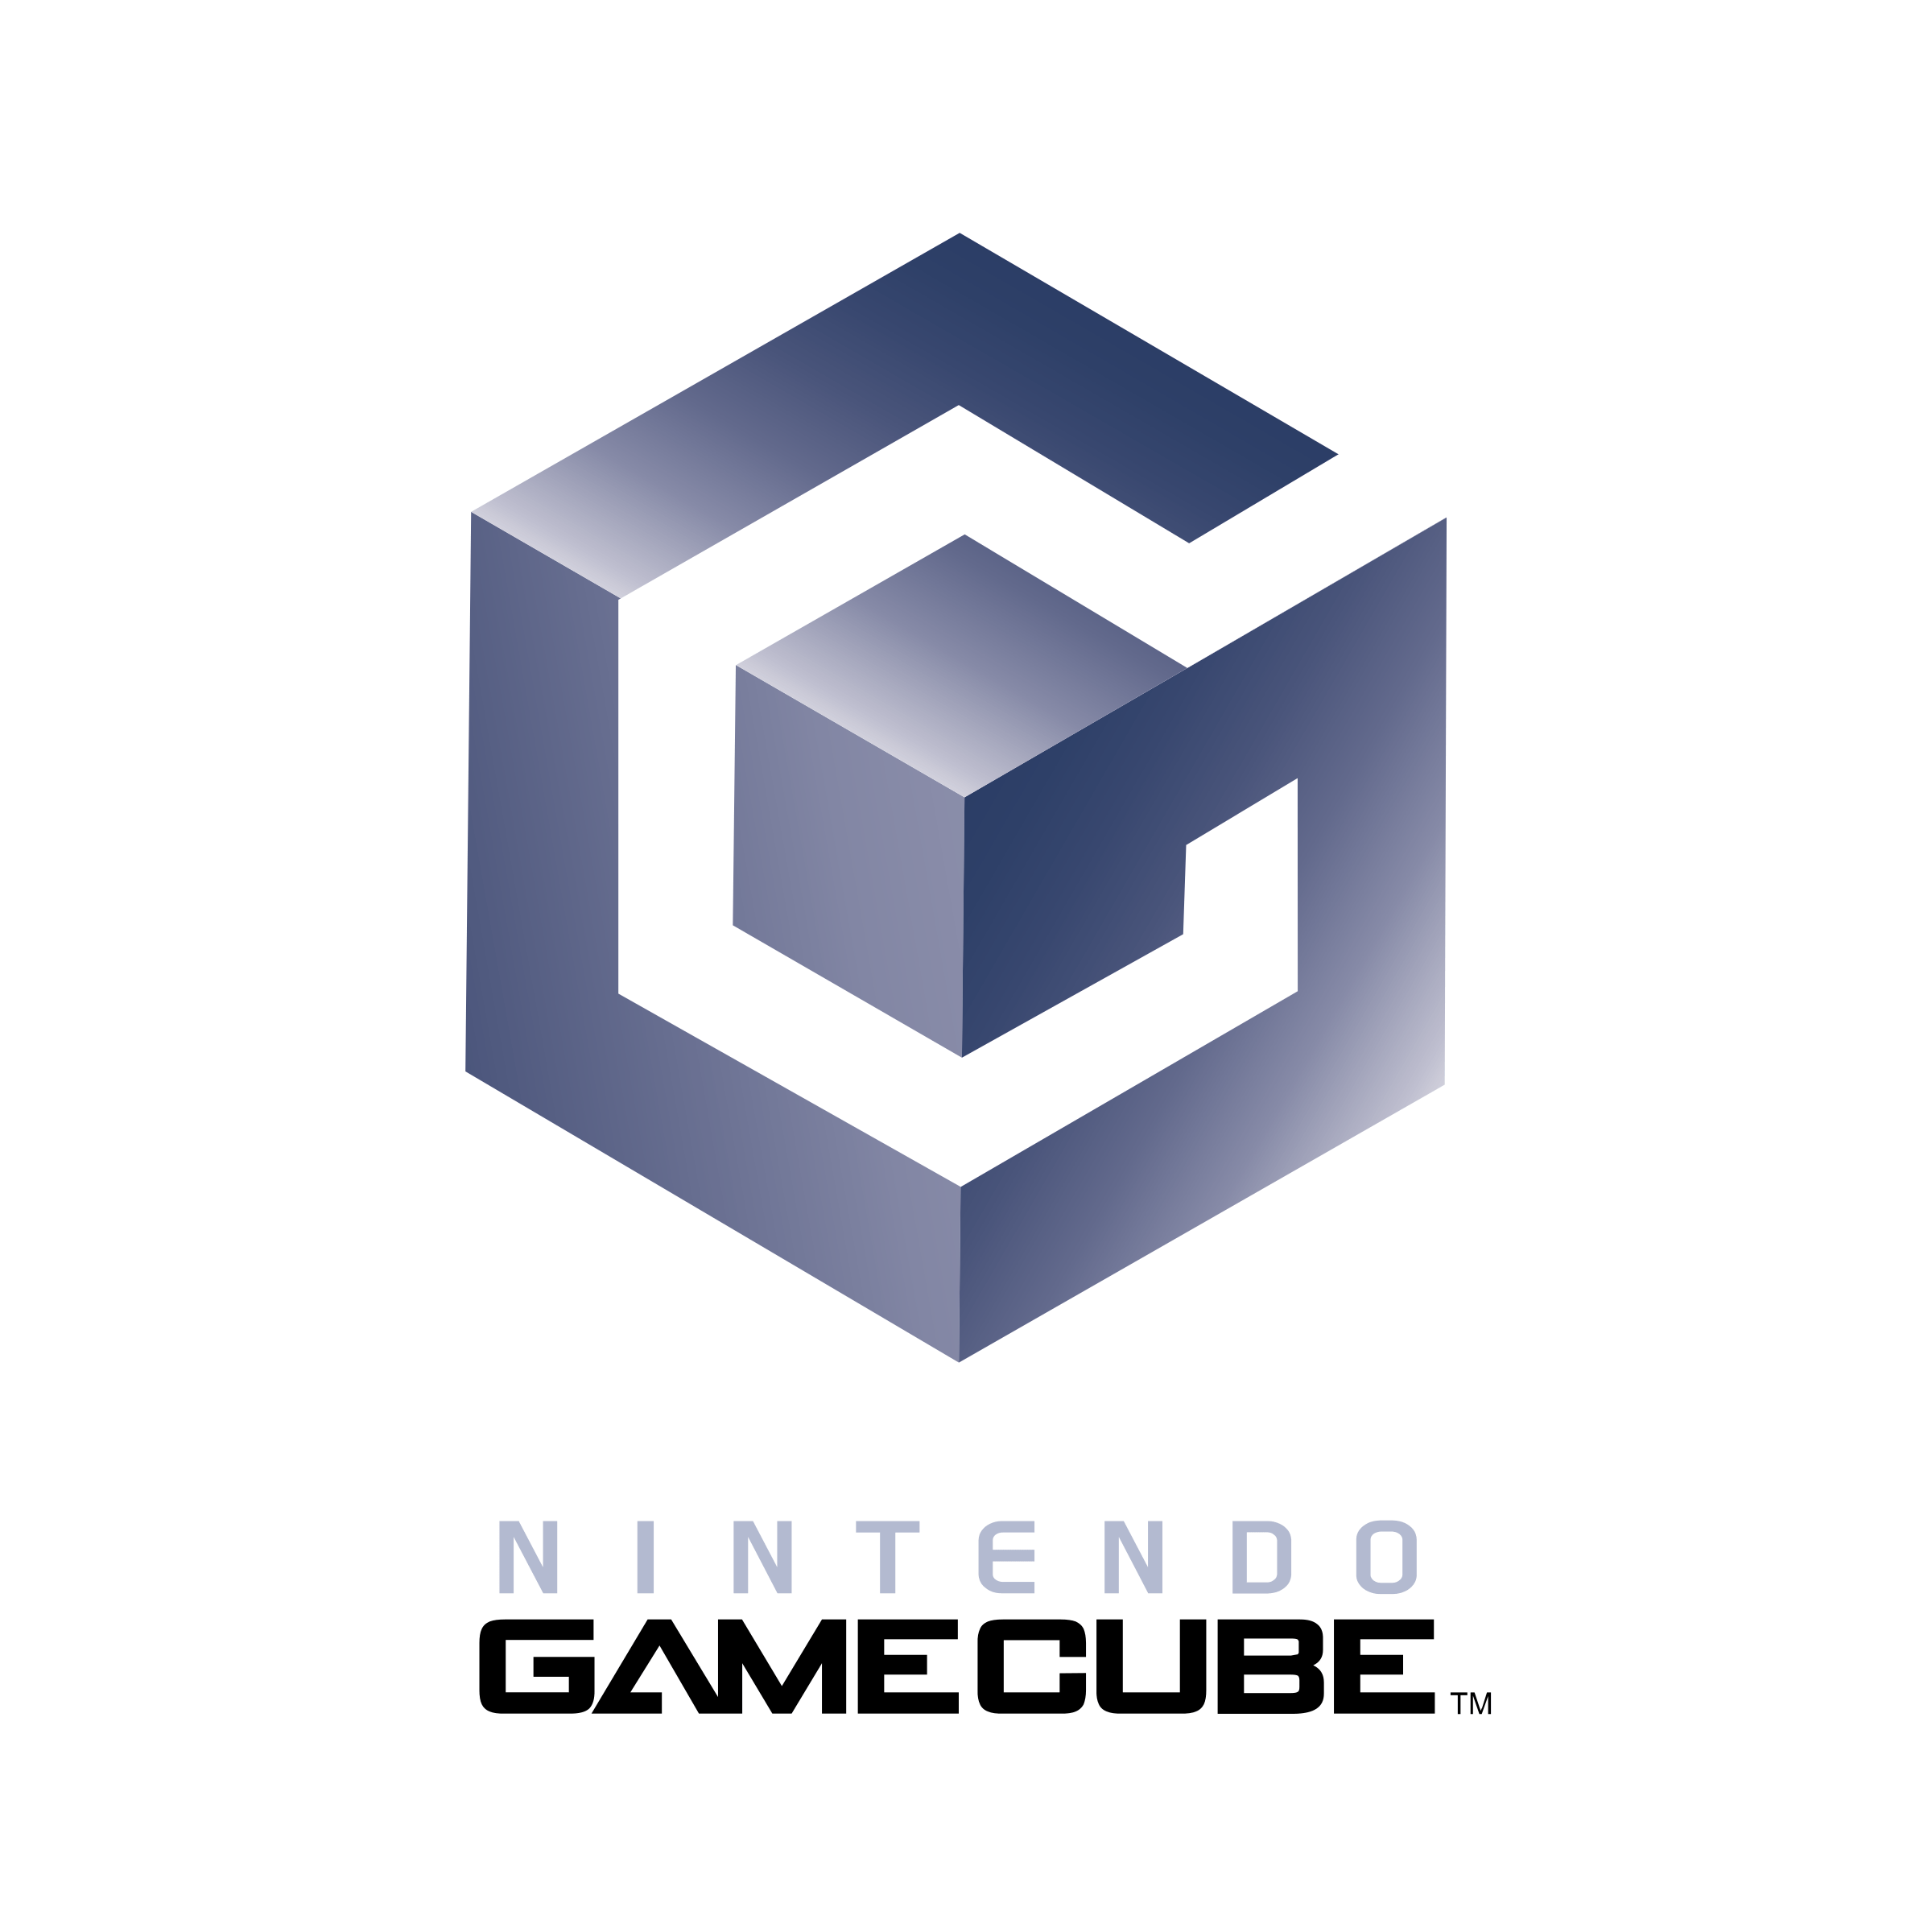 GameCube Logo - Nintendo Gamecube Logo PNG Transparent & SVG Vector - Freebie Supply